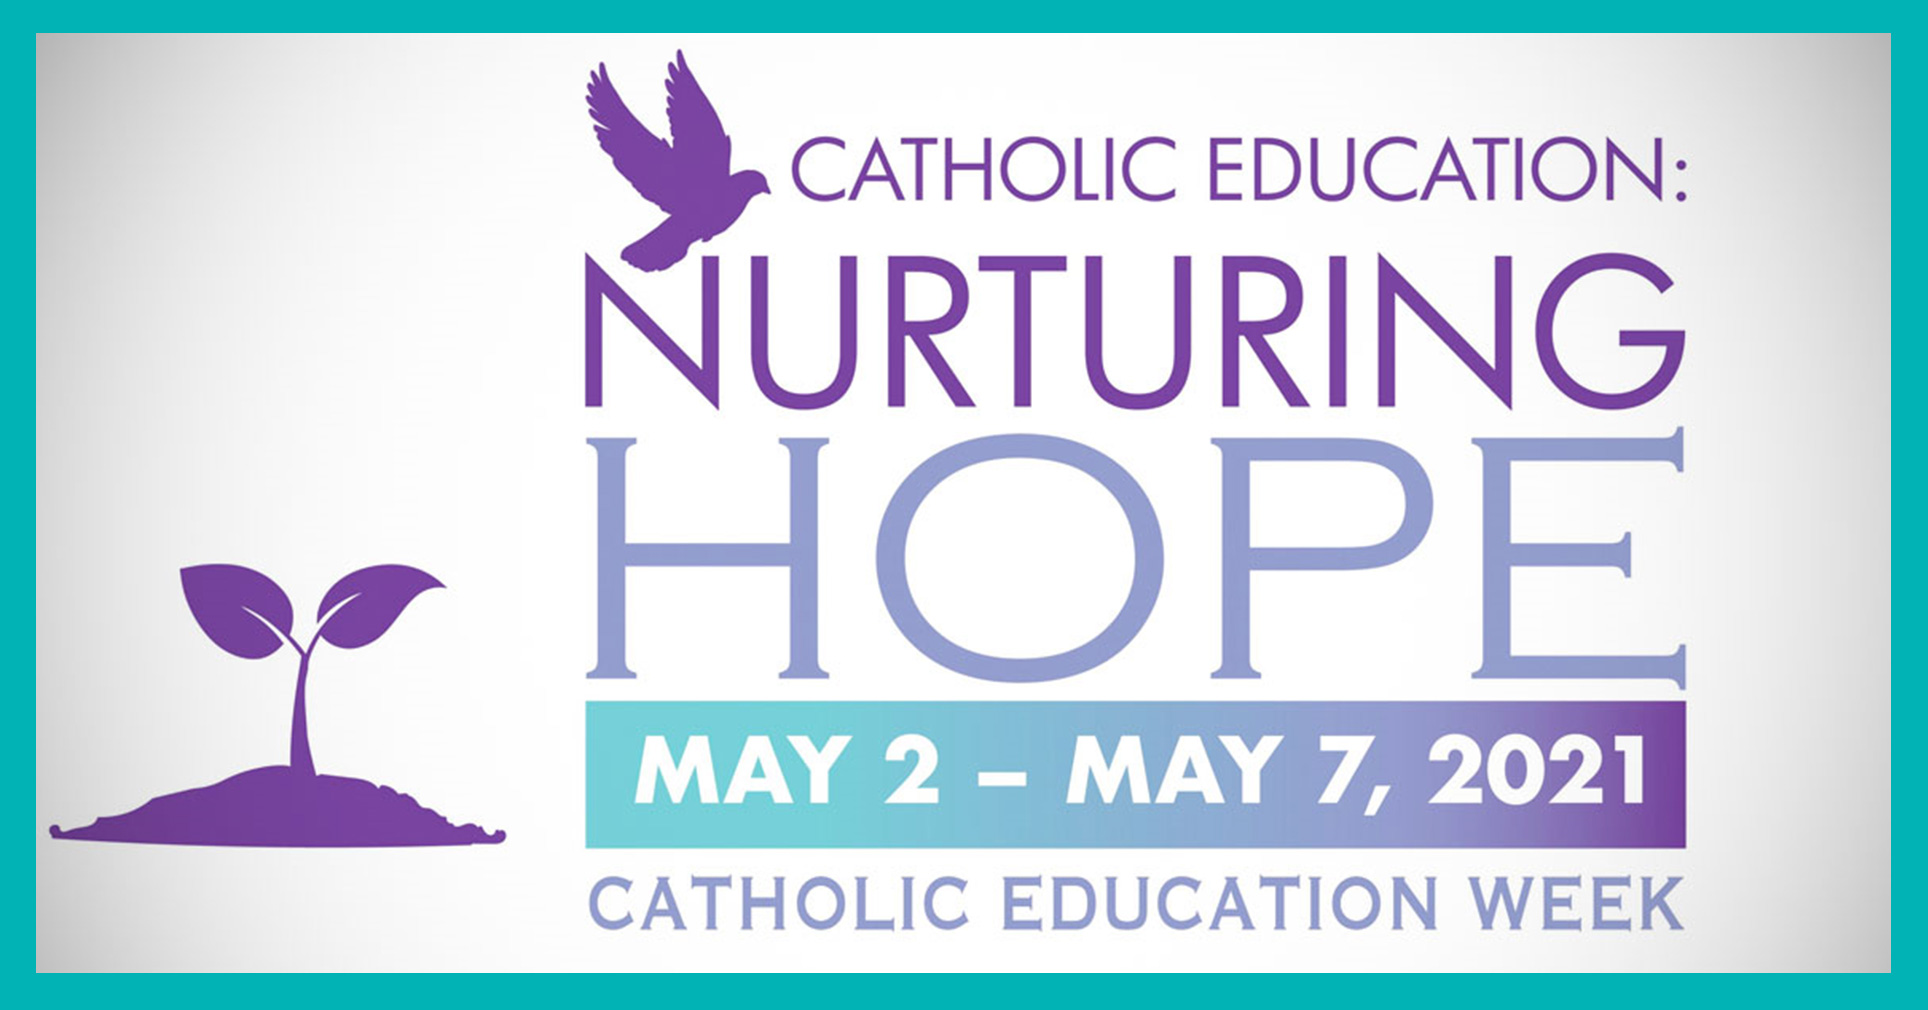 St. Clair Catholic Celebrates Catholic Education Week and Observes Mental Health Week, May 3-7